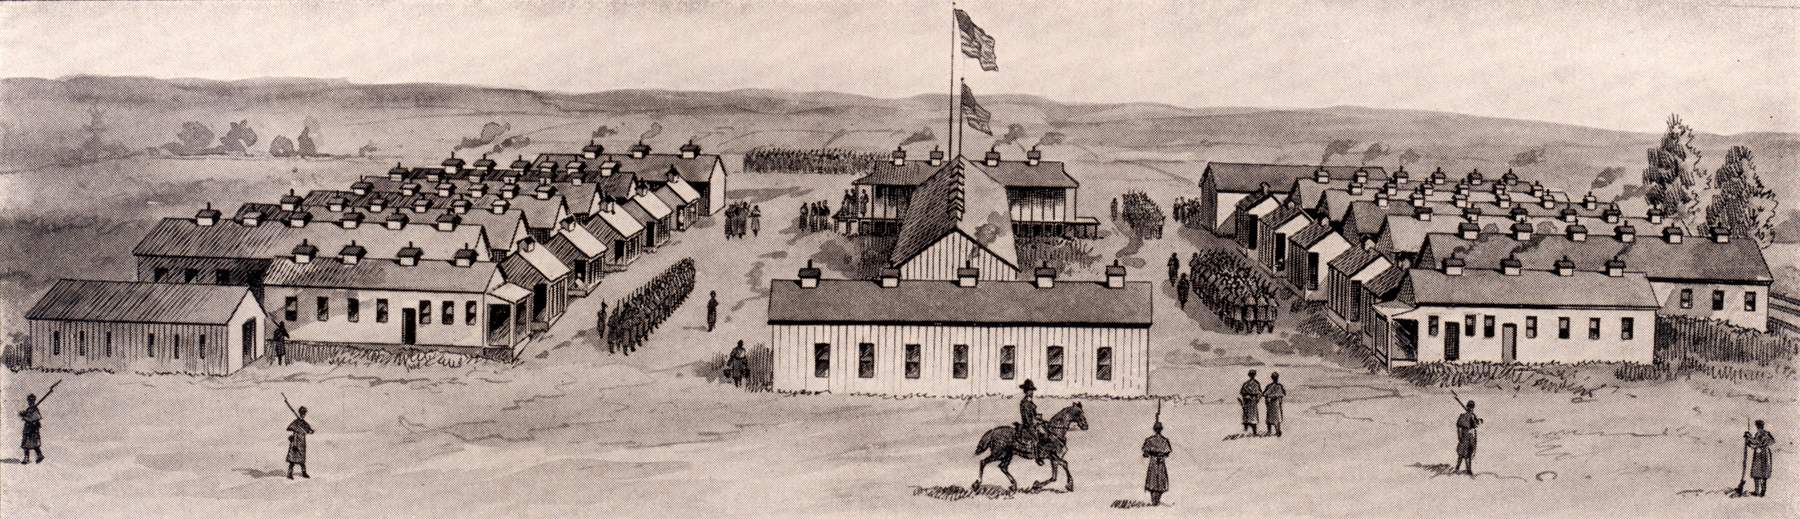 Camp William Penn, La Mott, Pennsylvania, circa 1864, engraving, zoomable